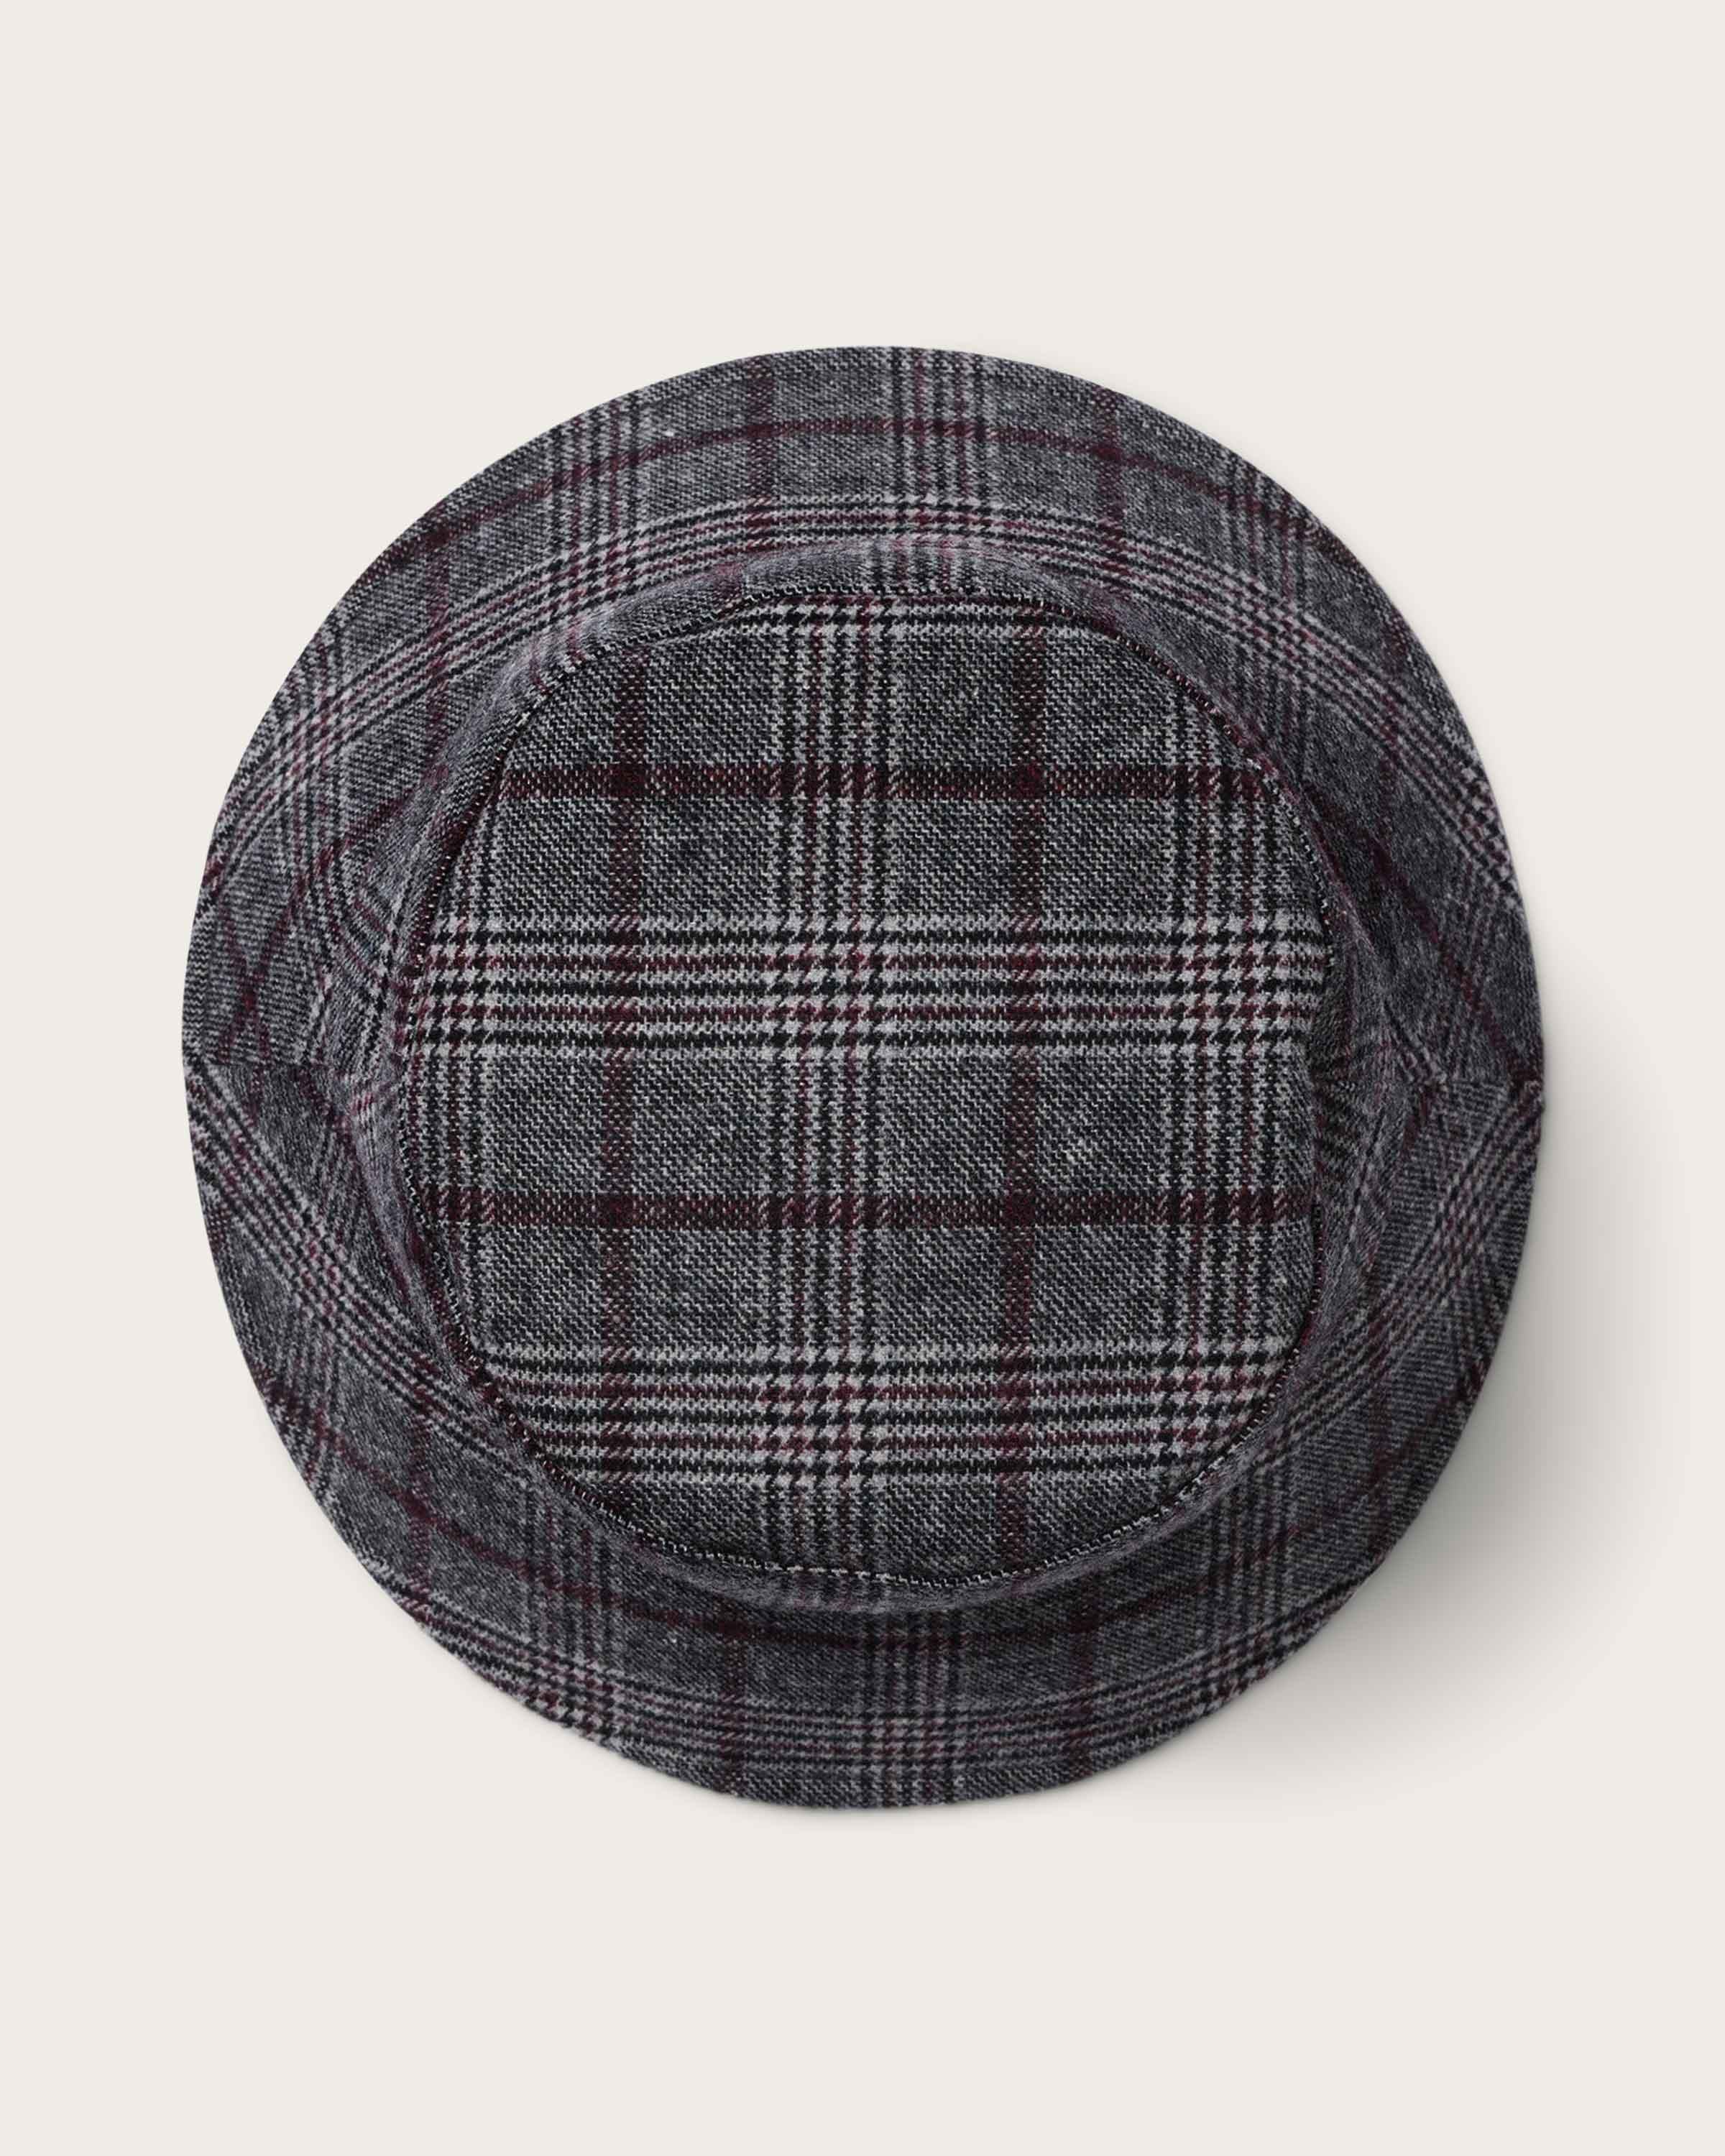 Gable Bucket in Grey & Burgundy - undefined - Hemlock Hat Co. Buckets